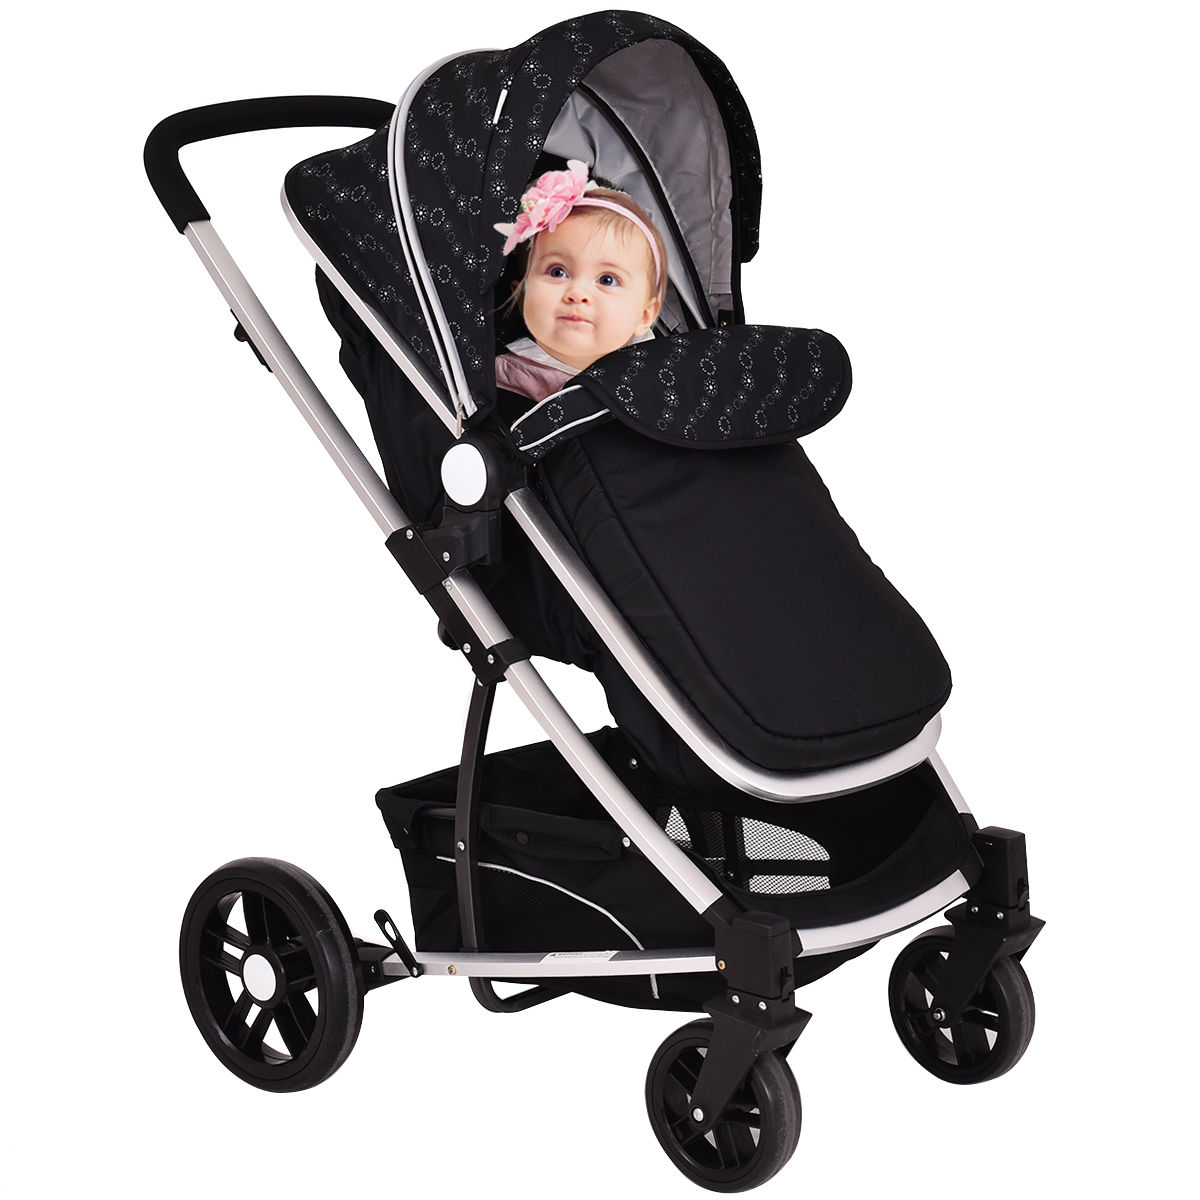 baby stroller for newborn